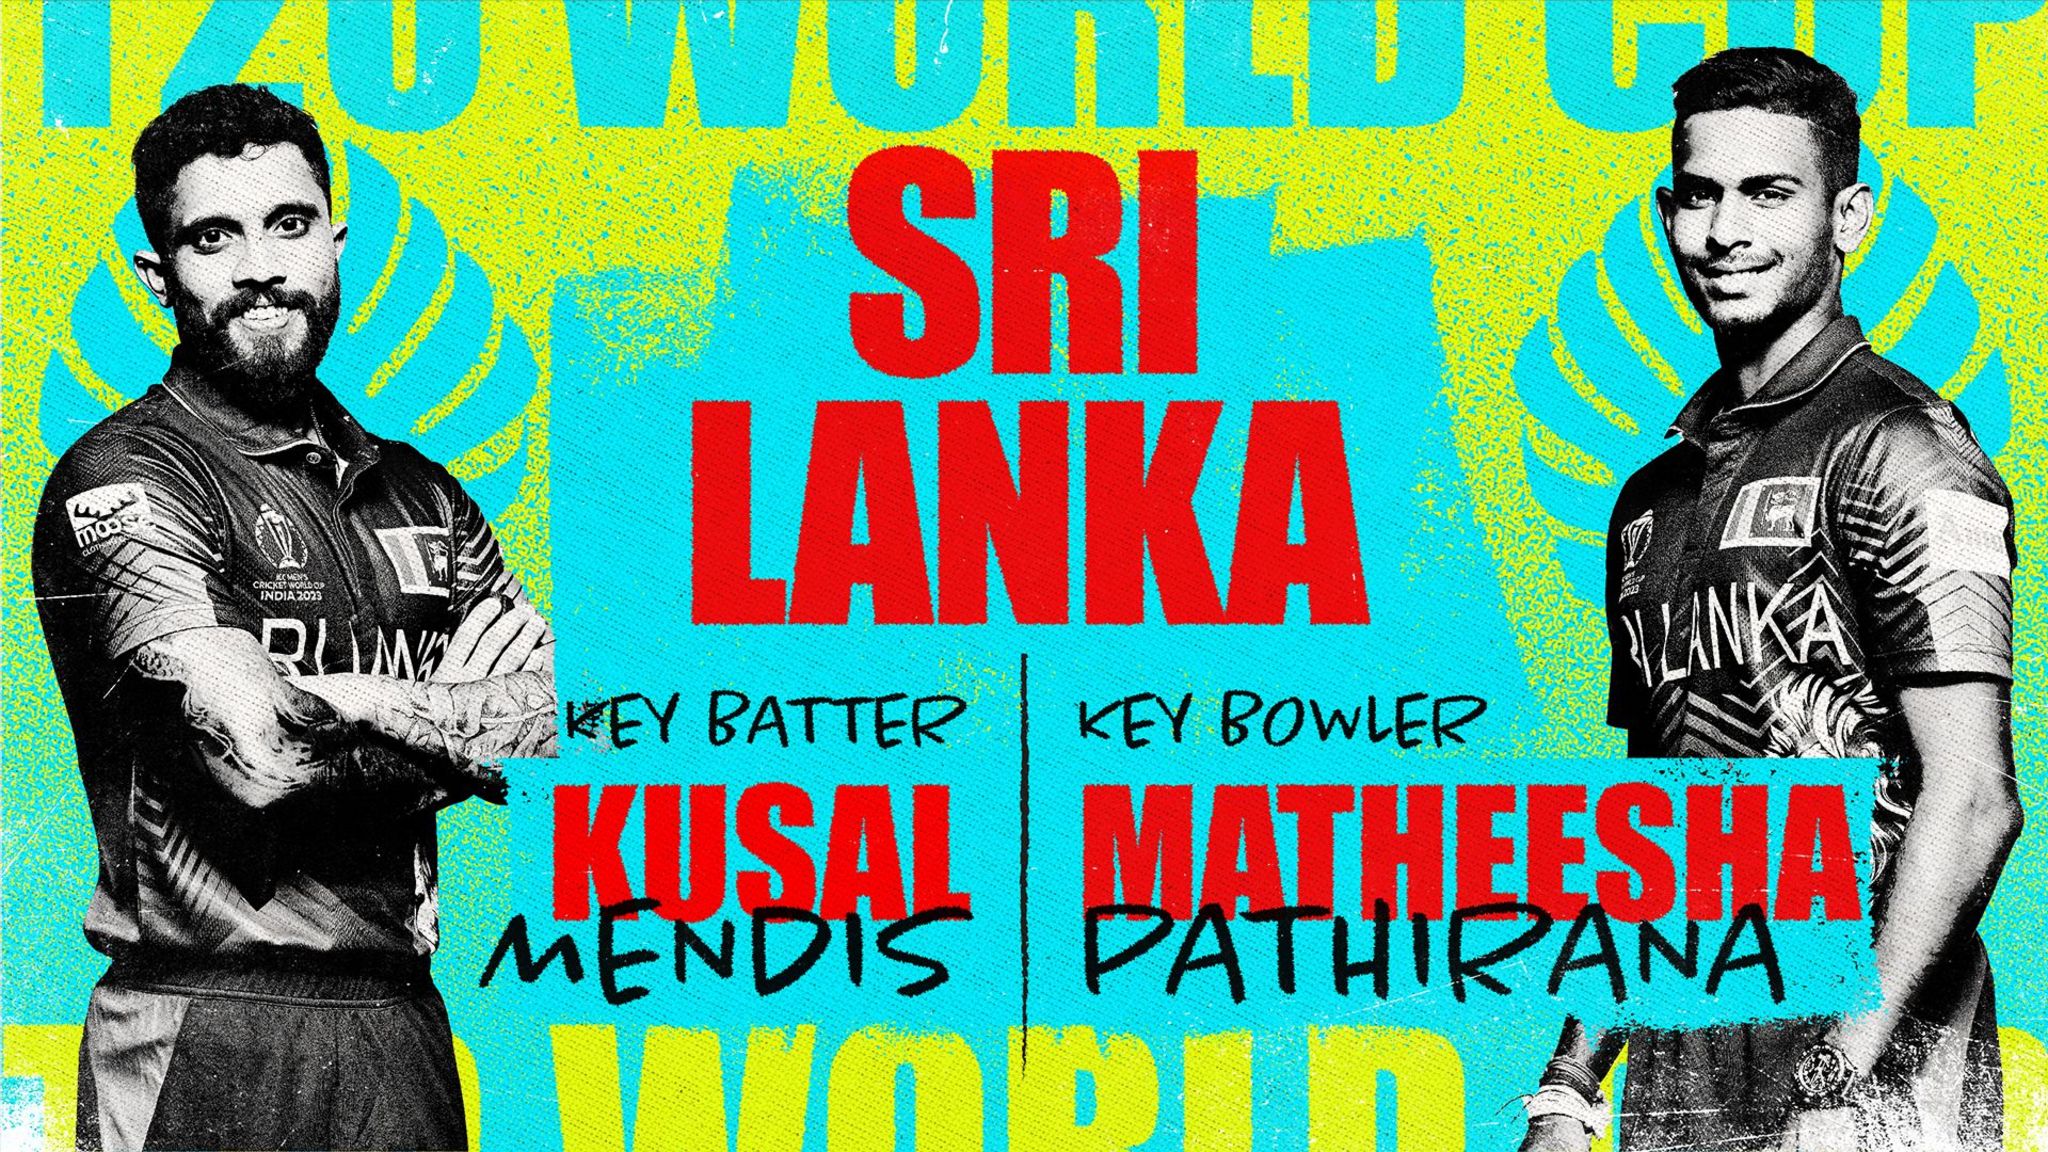 A graphic showing Kusal Mendis and Matheesha Pathirana as Sri Lanka's key batter and bowler at the Men's T20 World Cup